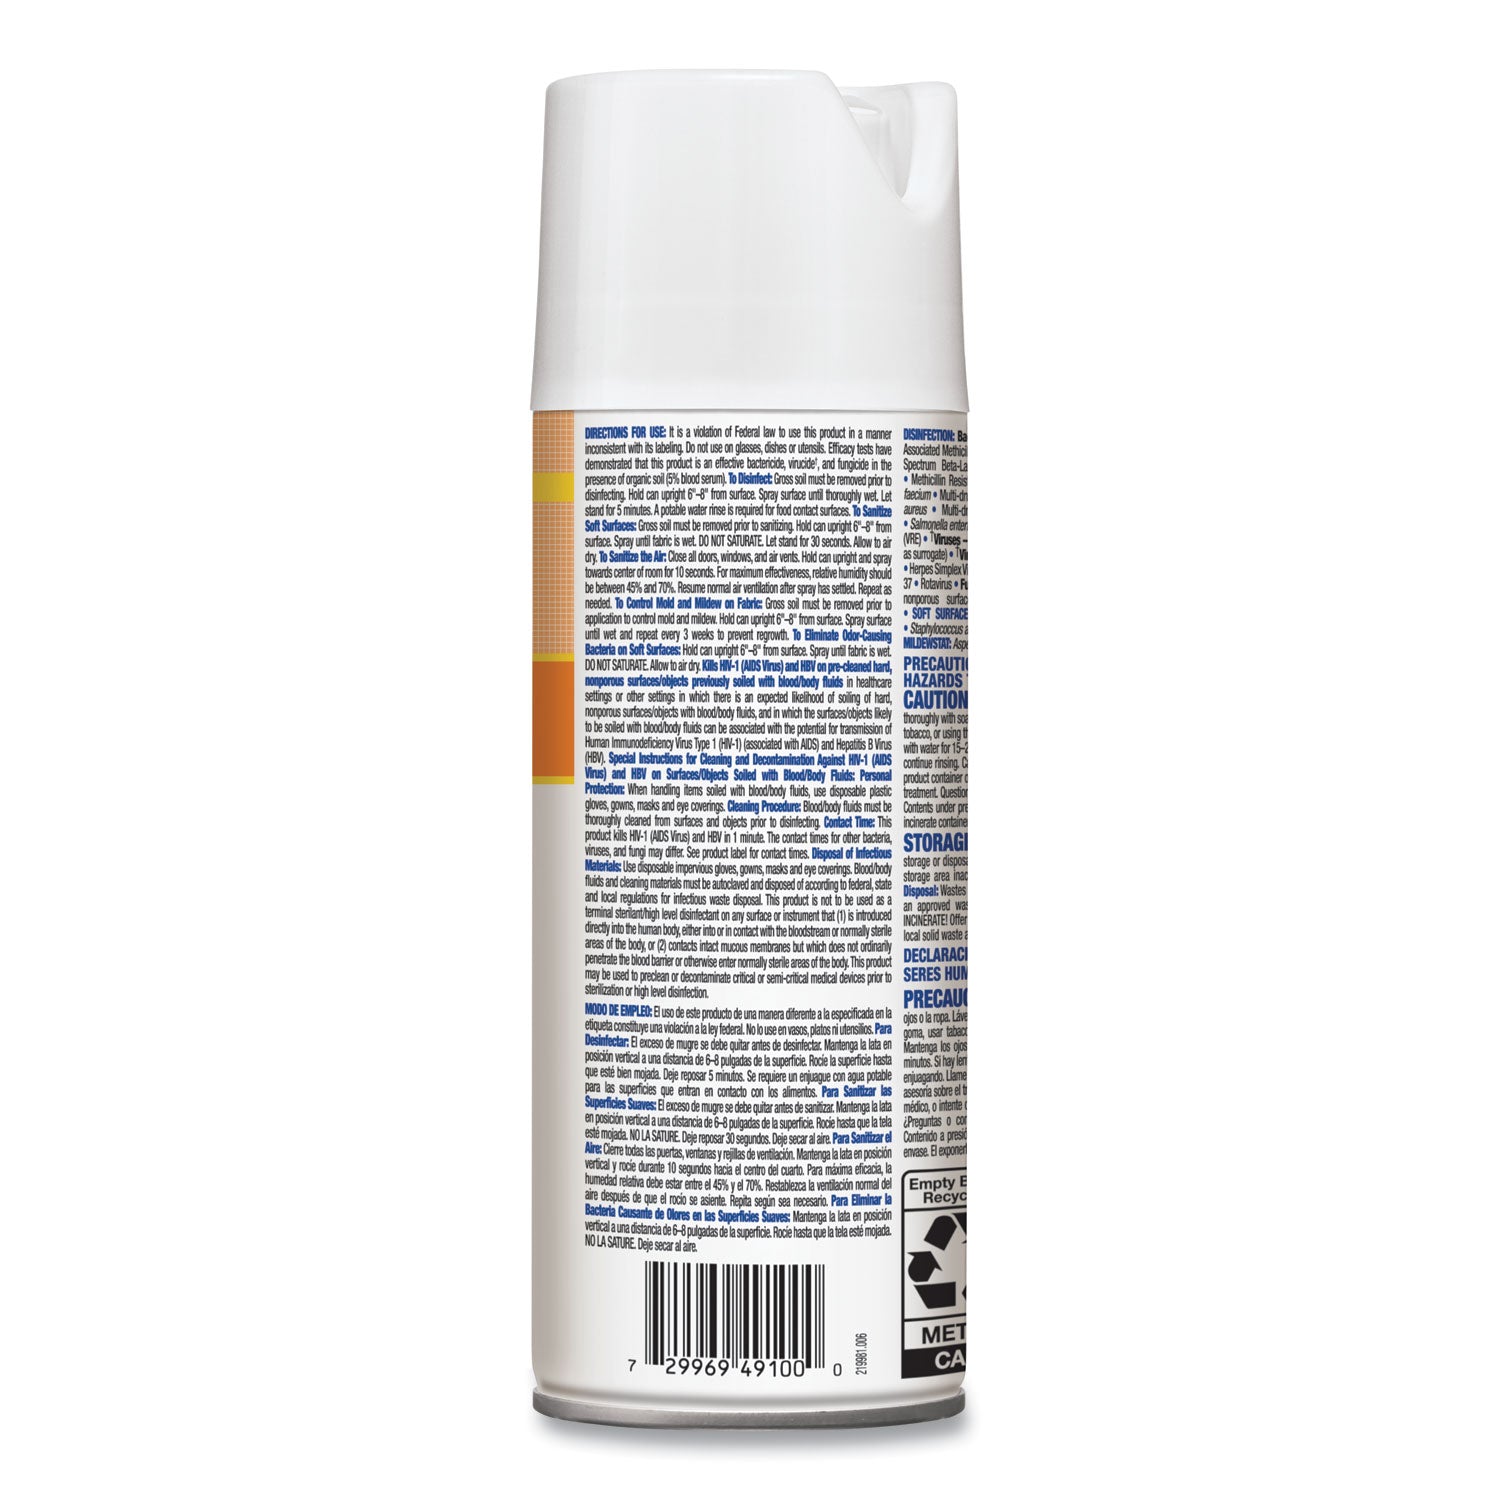 Citrace Hospital Disinfectant and Deodorizer, Citrus, 14 oz Aerosol Spray, 12/Carton - 